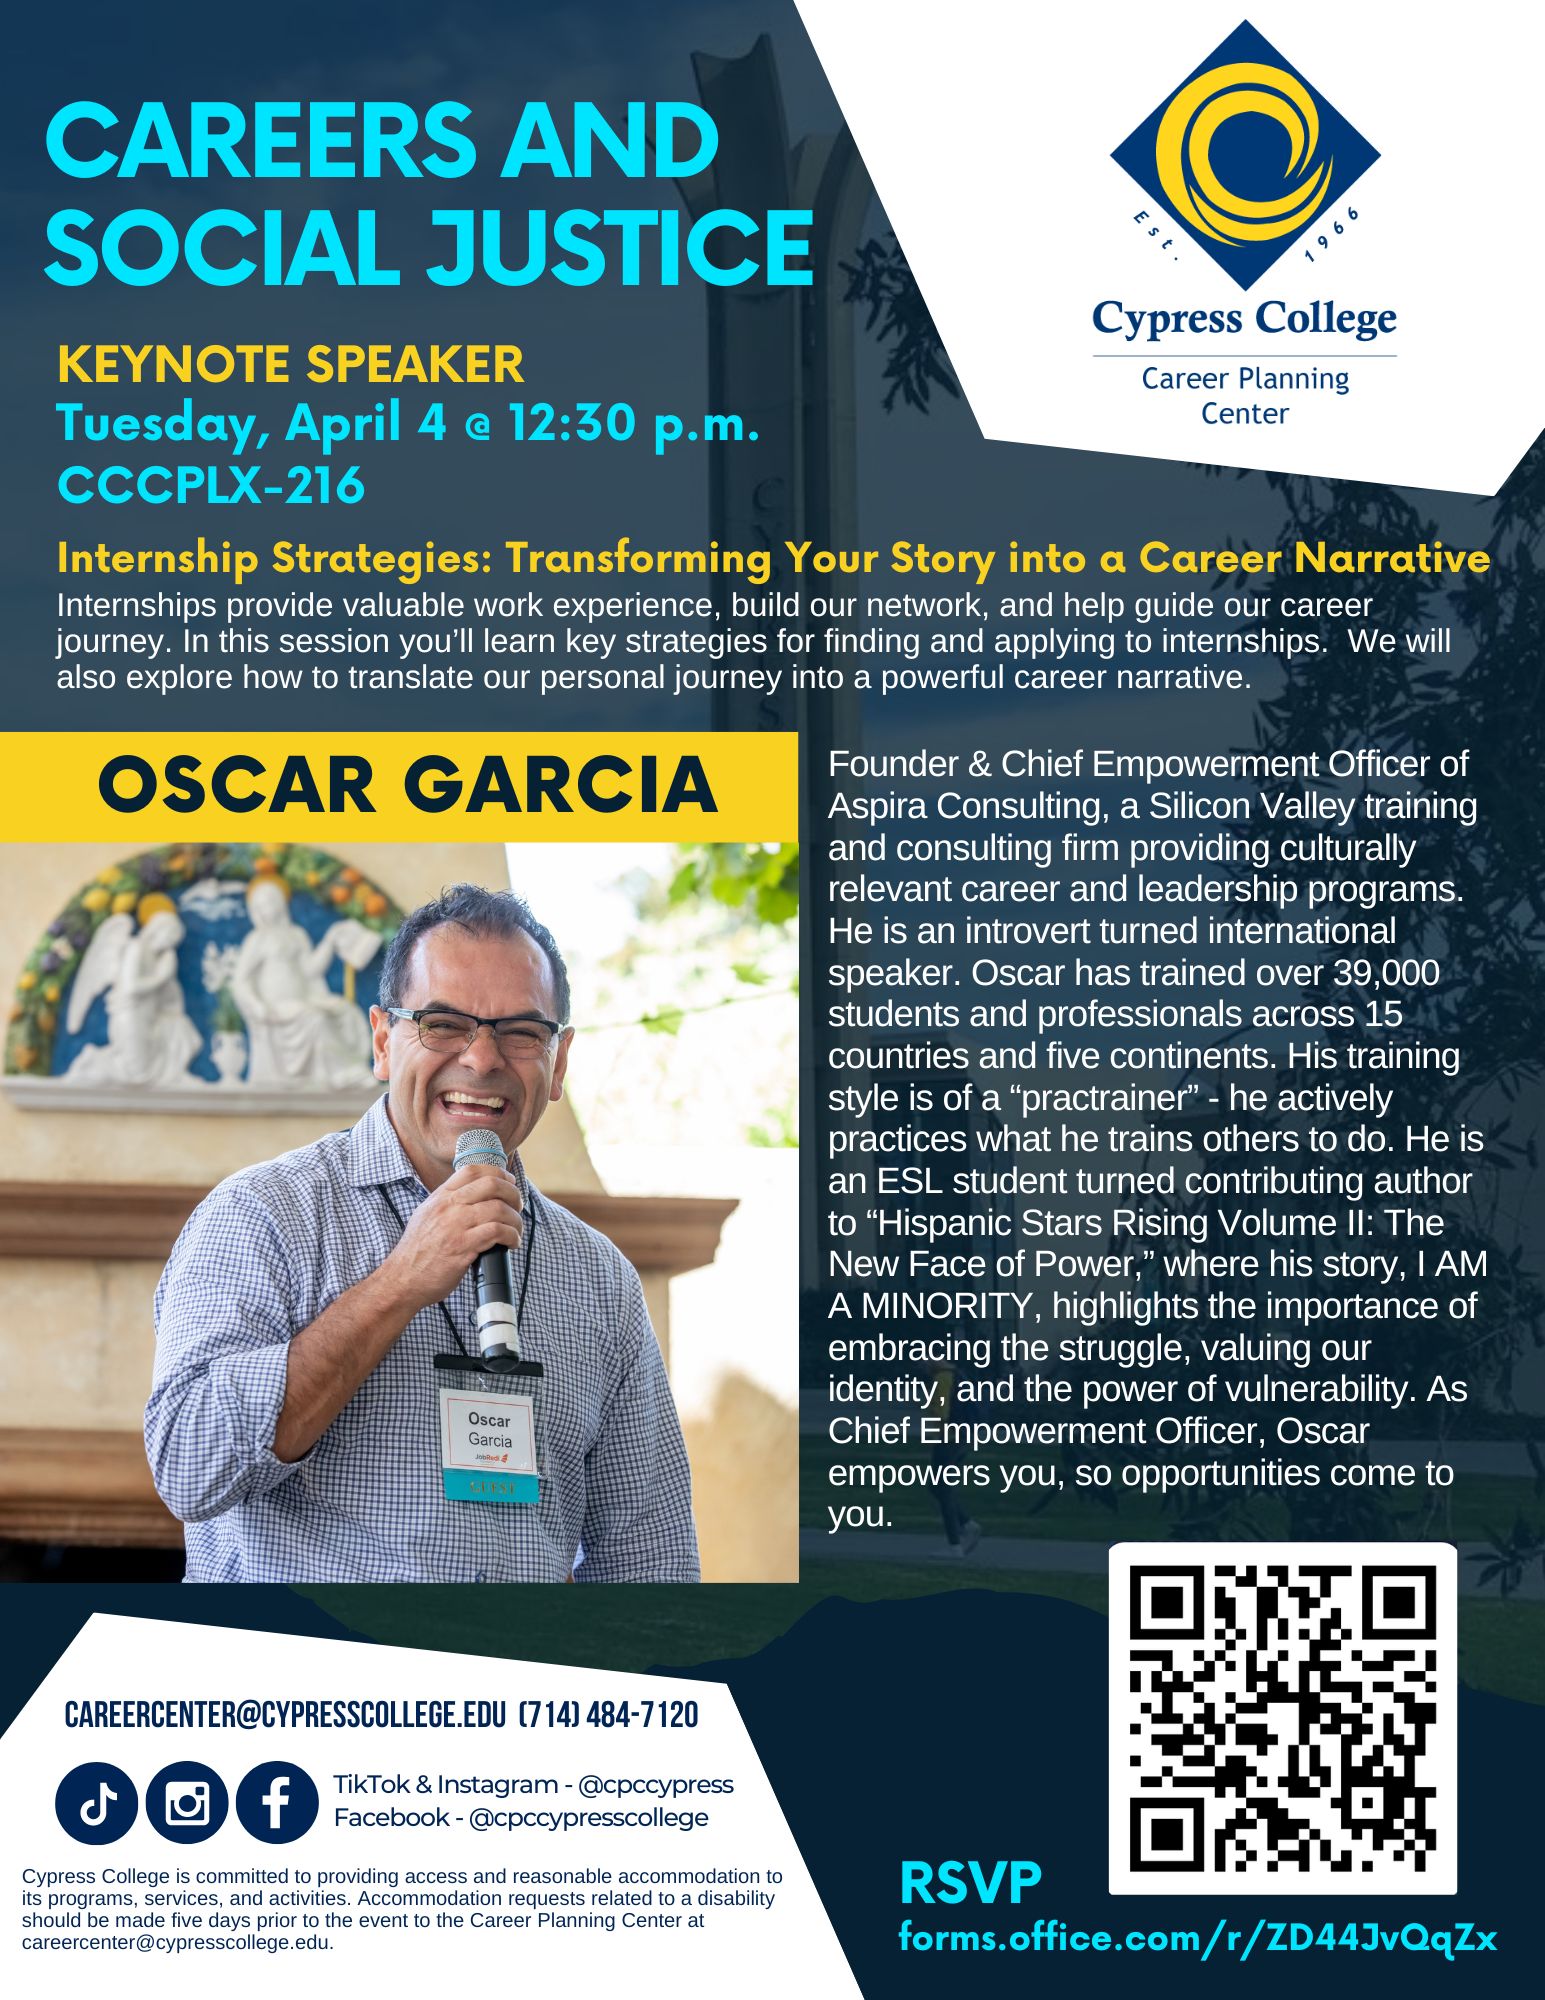 Careers in Social Justice flyer